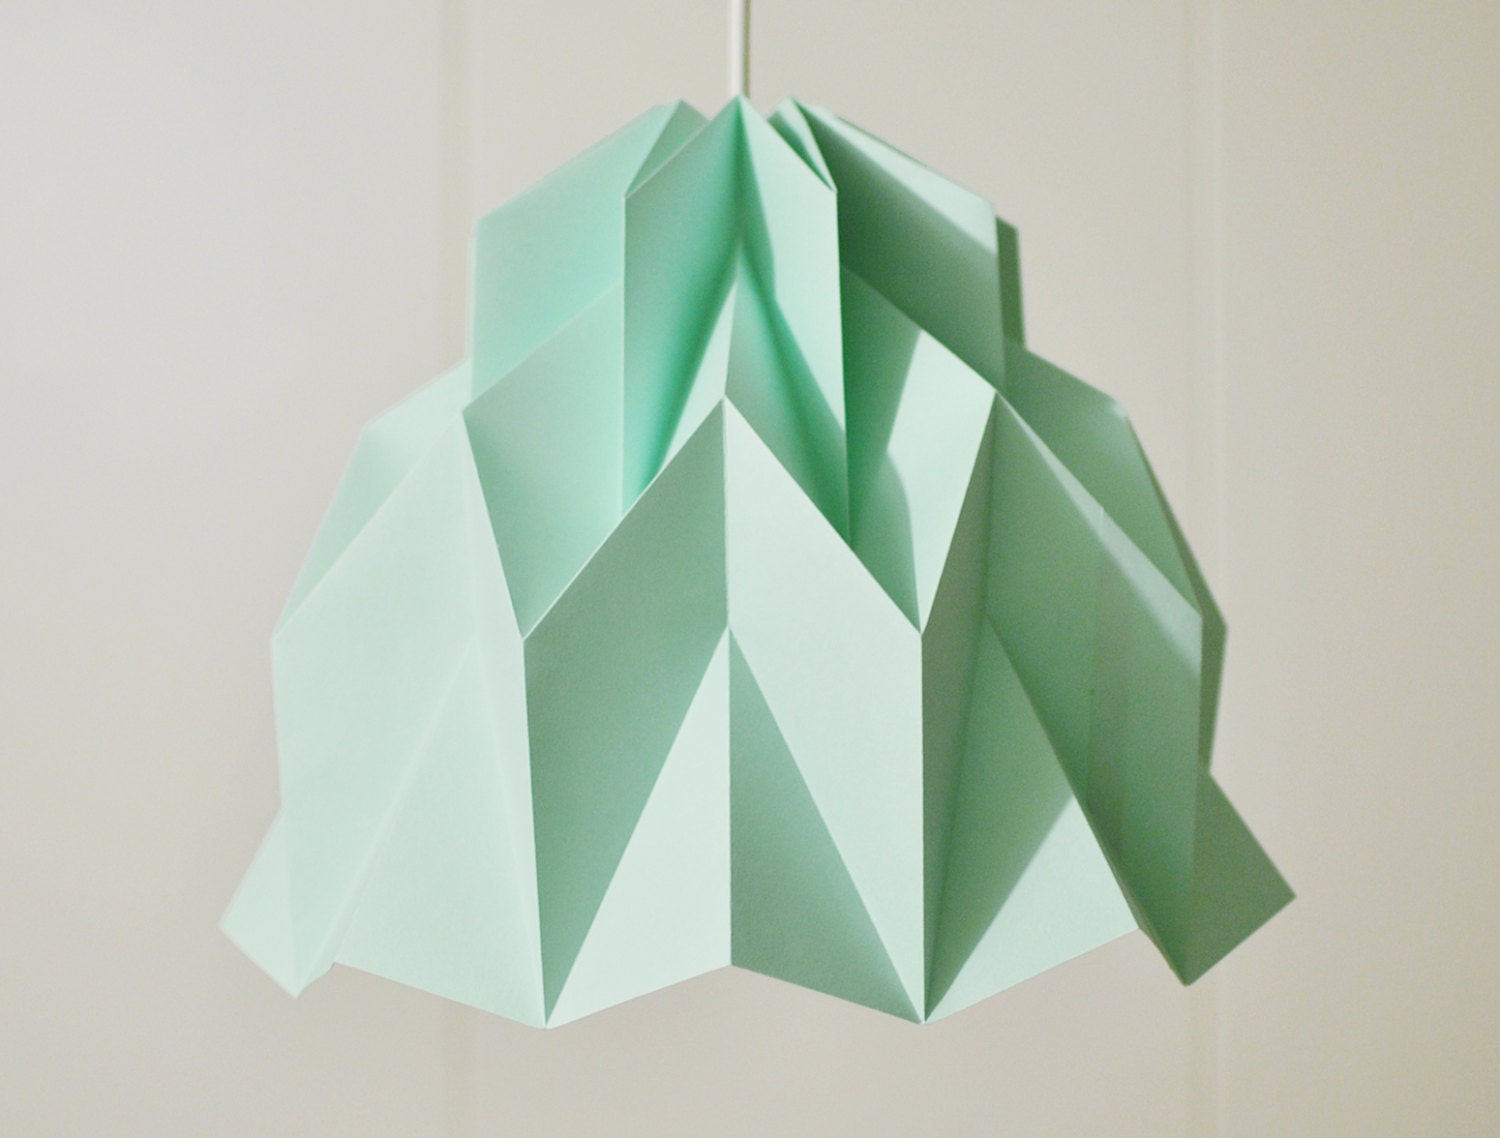 Ruffle: Origami Paper Lamp Shade / Lantern - Mint